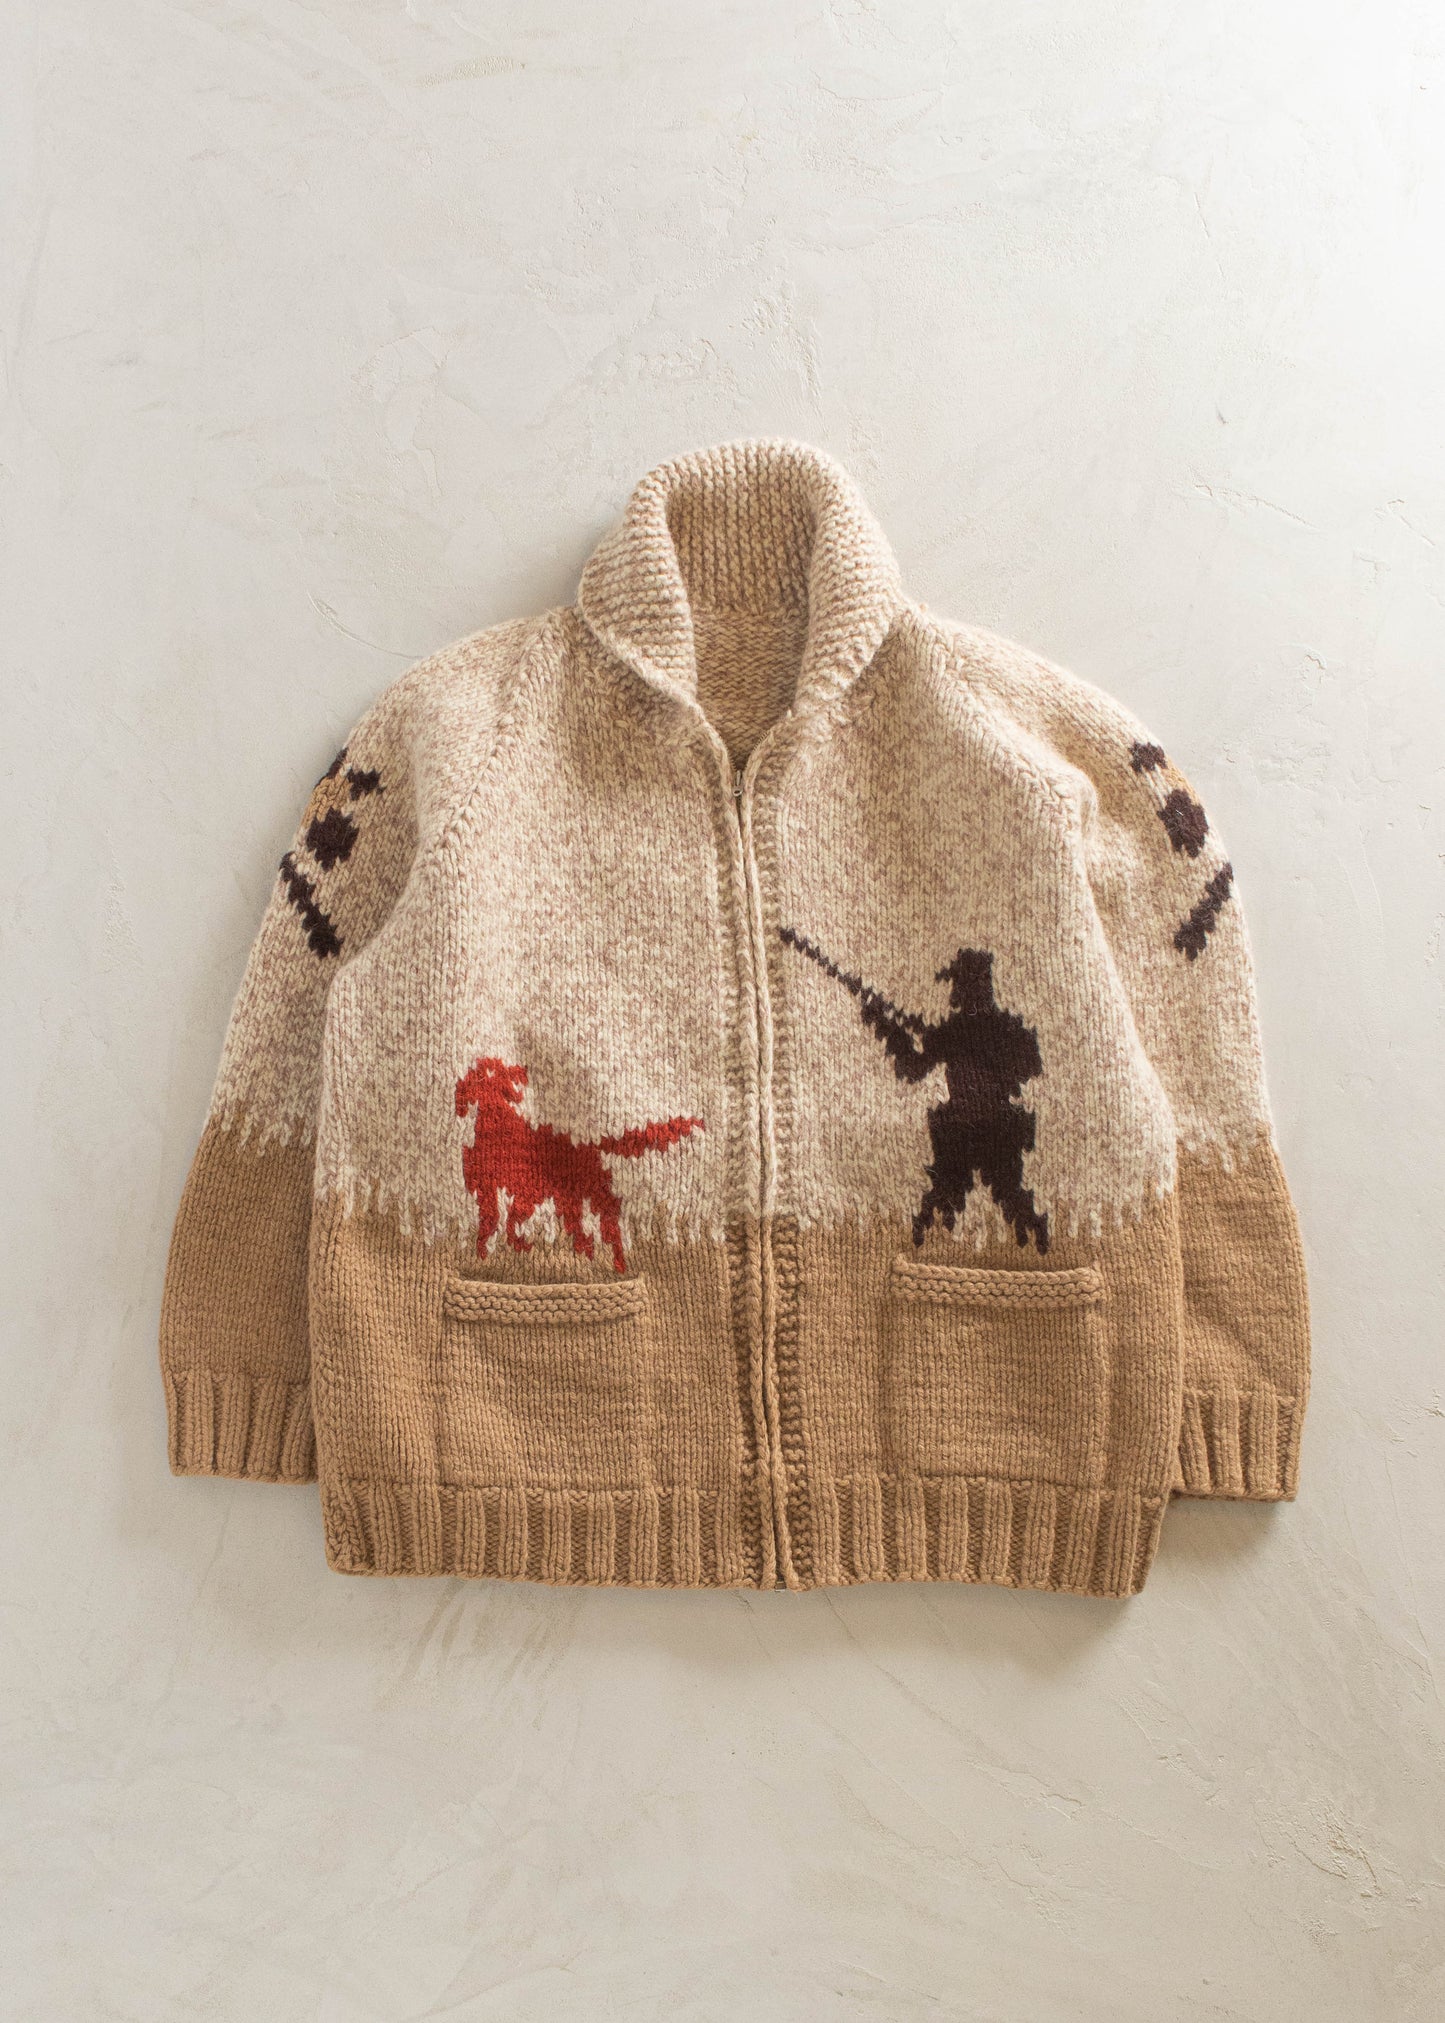 1980s Hunting Pattern Cowichan Style Wool Cardigan Size L/XL